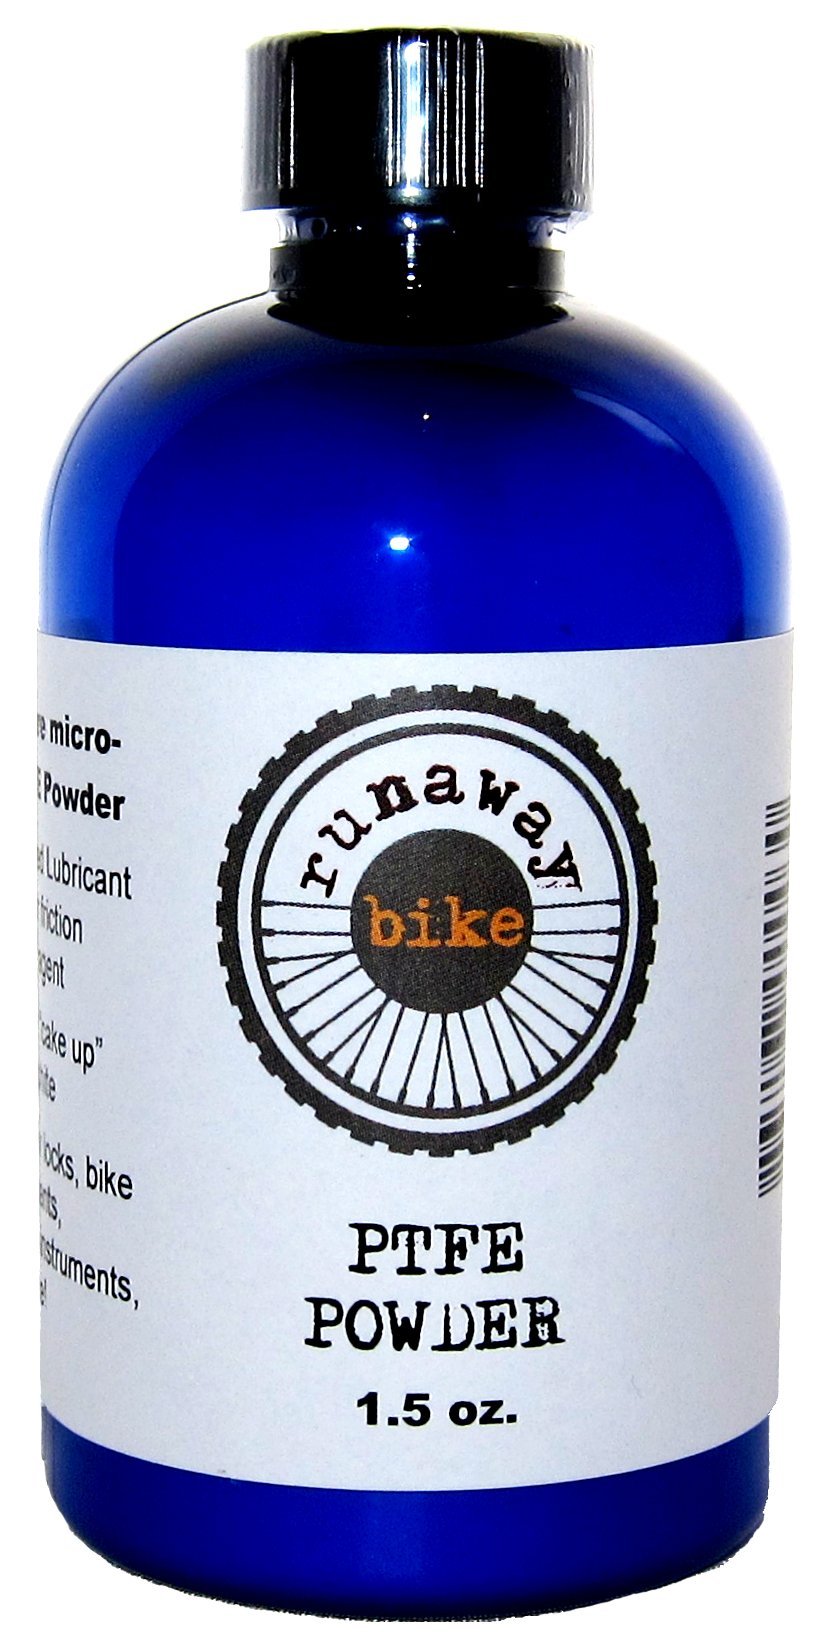 Runaway Bike PTFE Powder (Teflon) / Applicator Brush Included with 1.5 oz Bottle 1.5 ounces